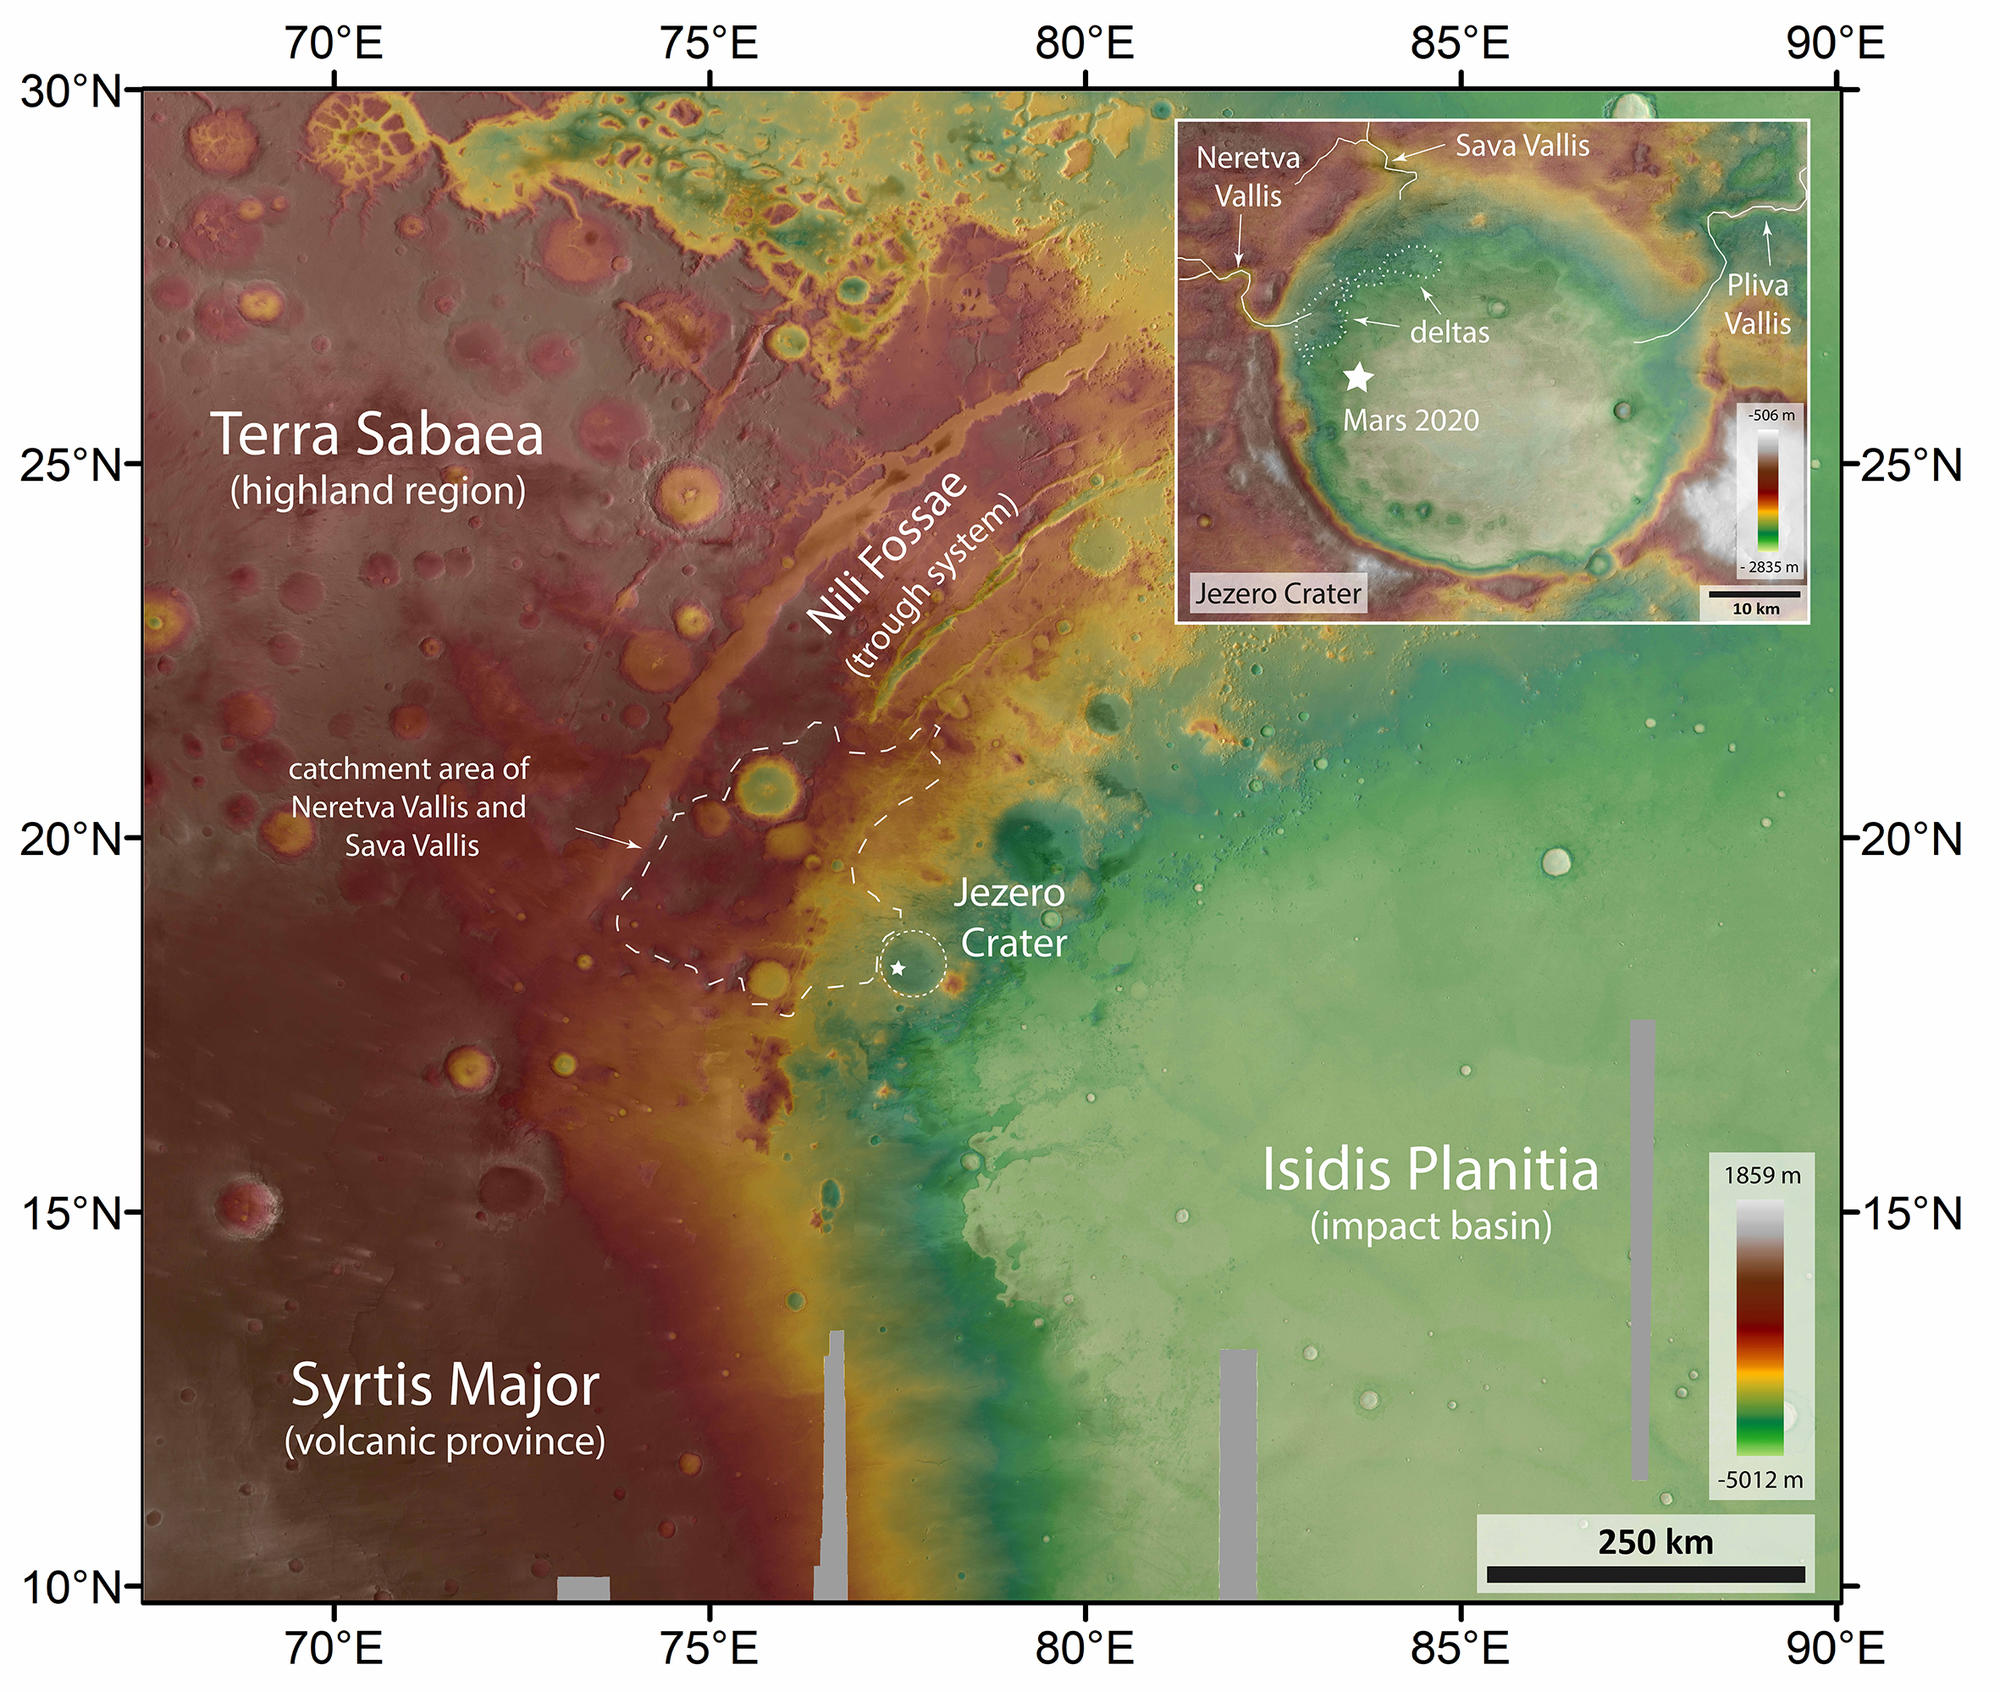 Mars 2020 landing site topographic image map